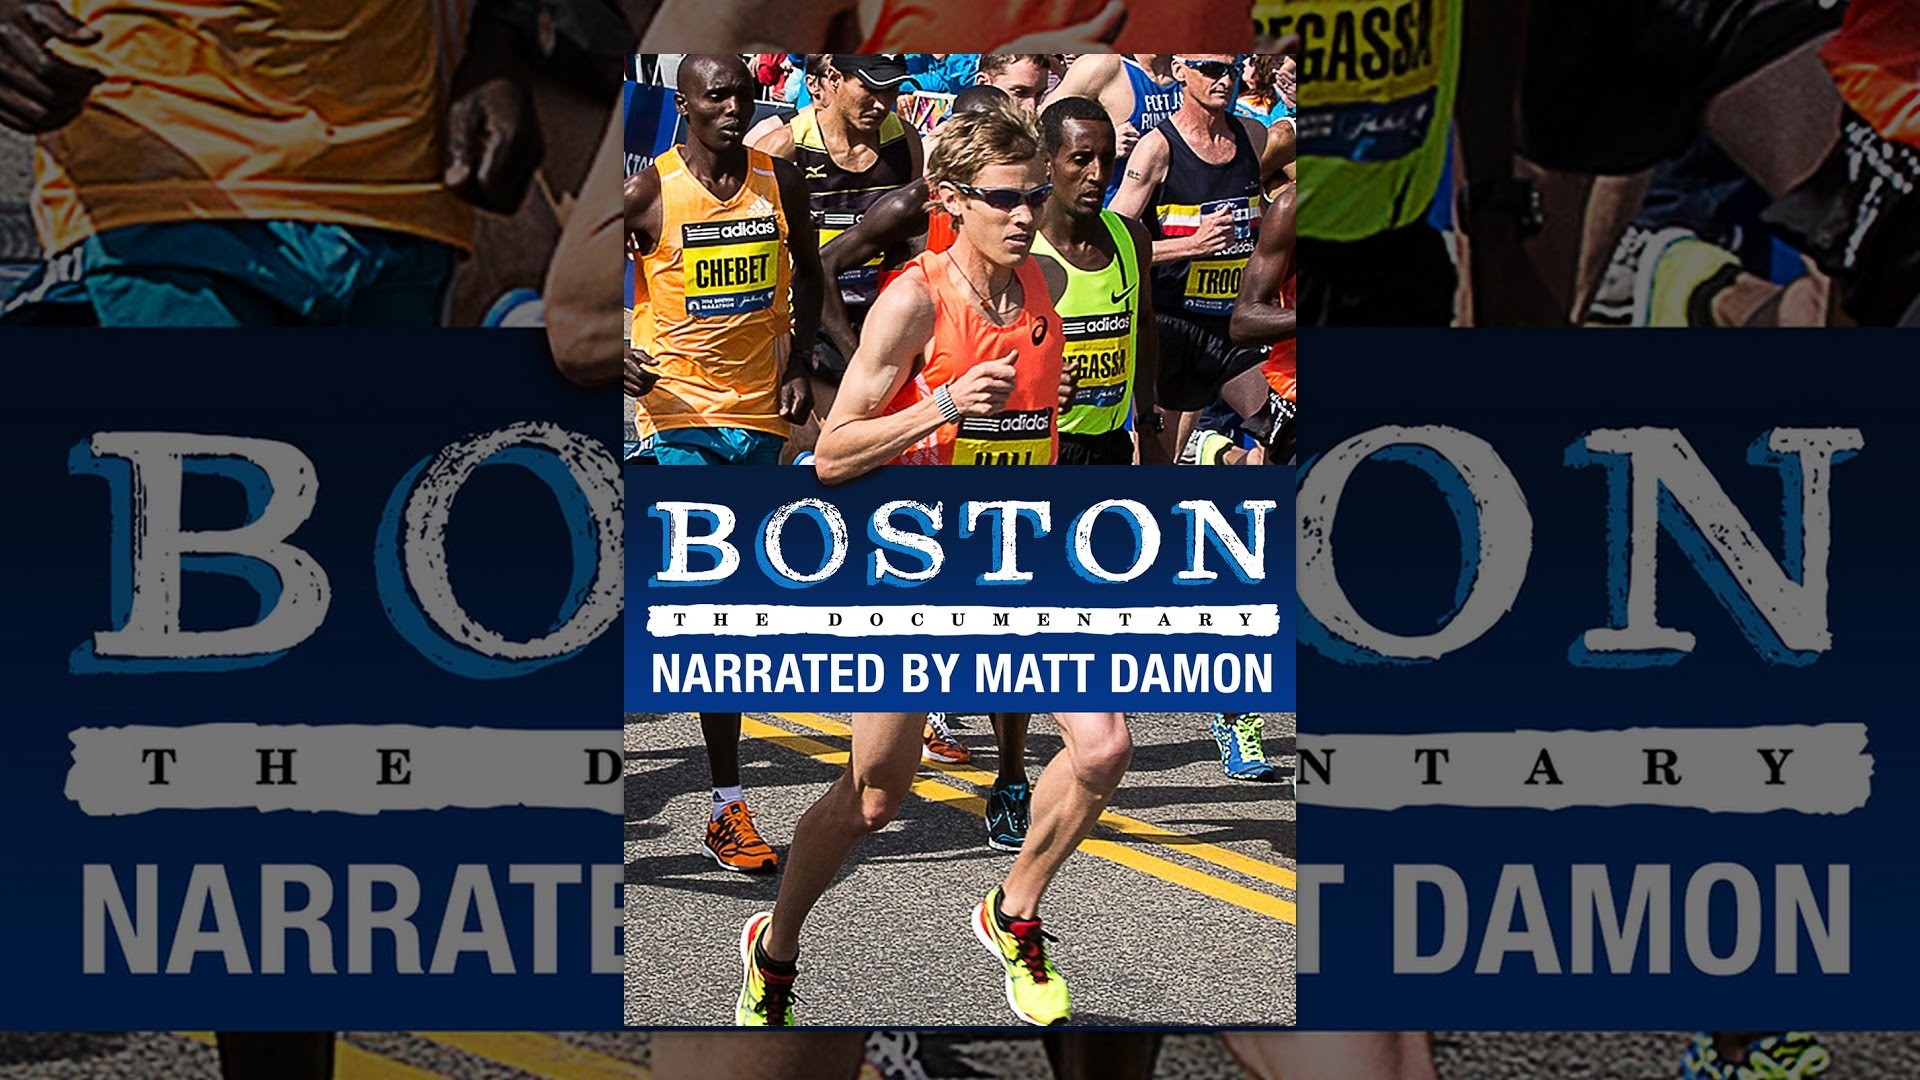 Boston narrated by Matt Damon on the big screen April 12-19 in Boston